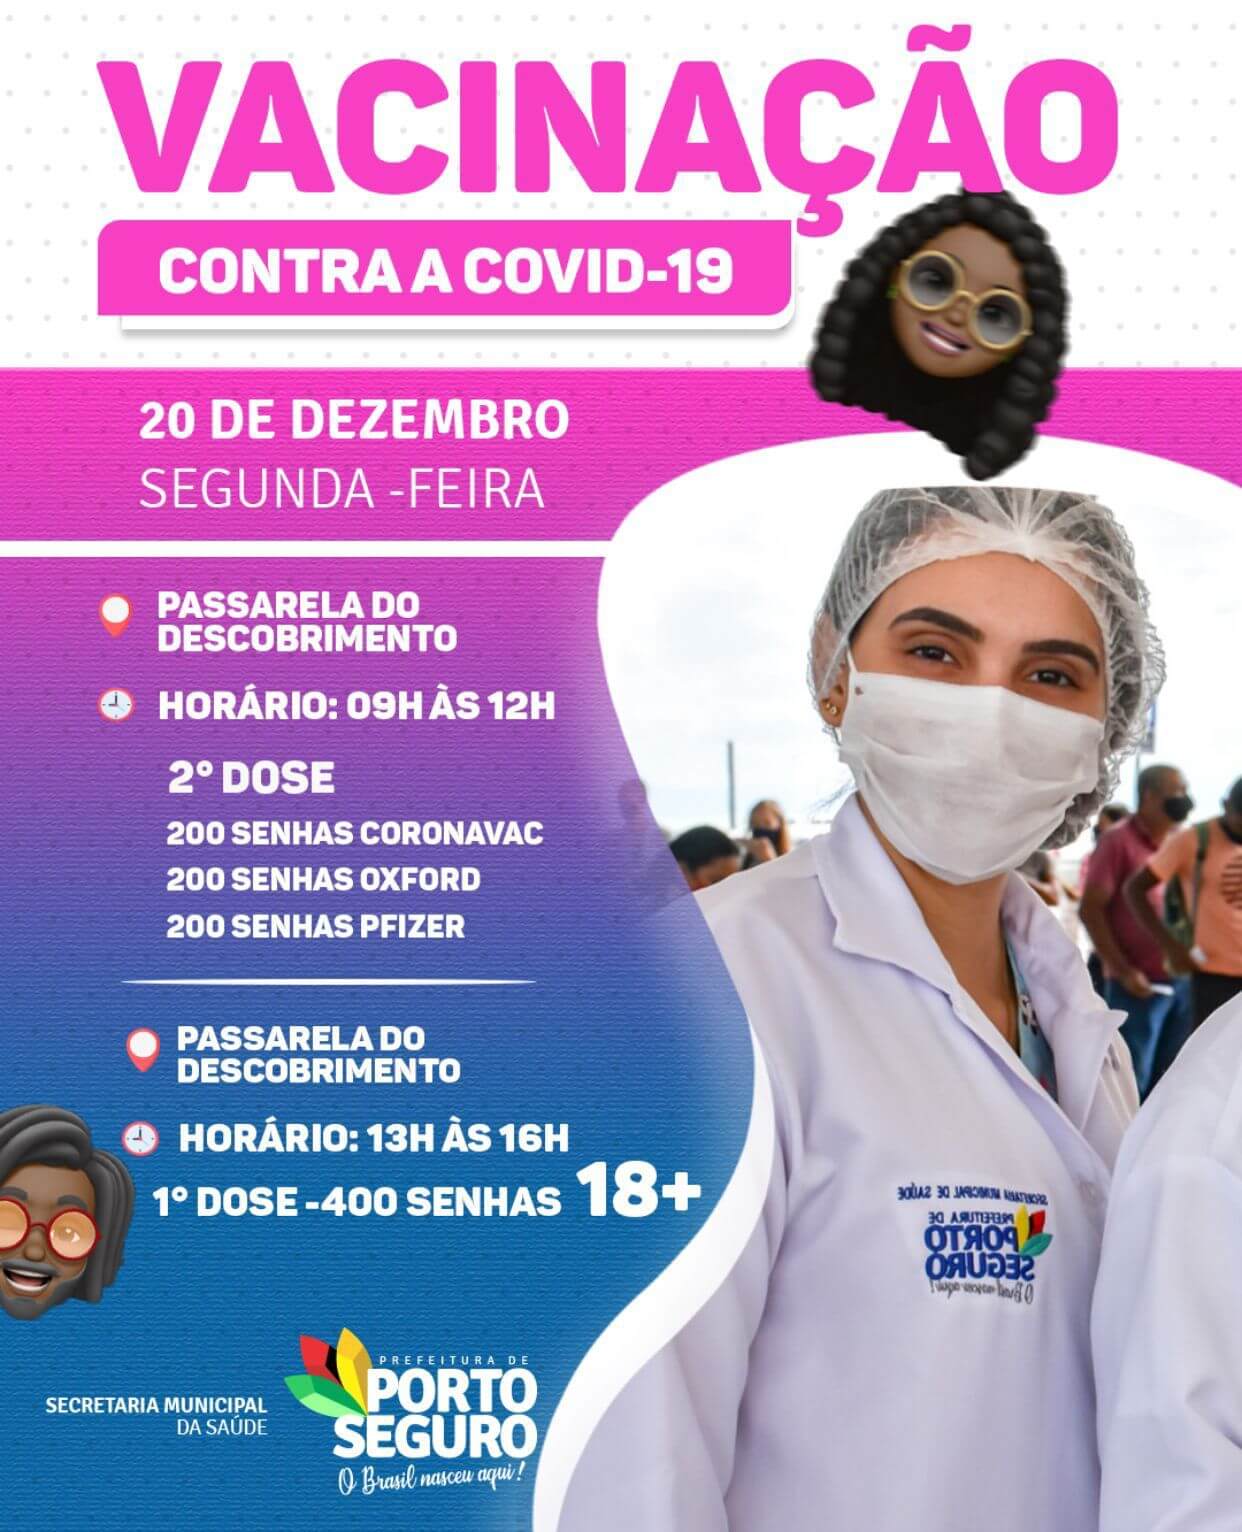 PORTO SEGURO: Vacina contra Covid-19 segunda-feira dia 20/12 26